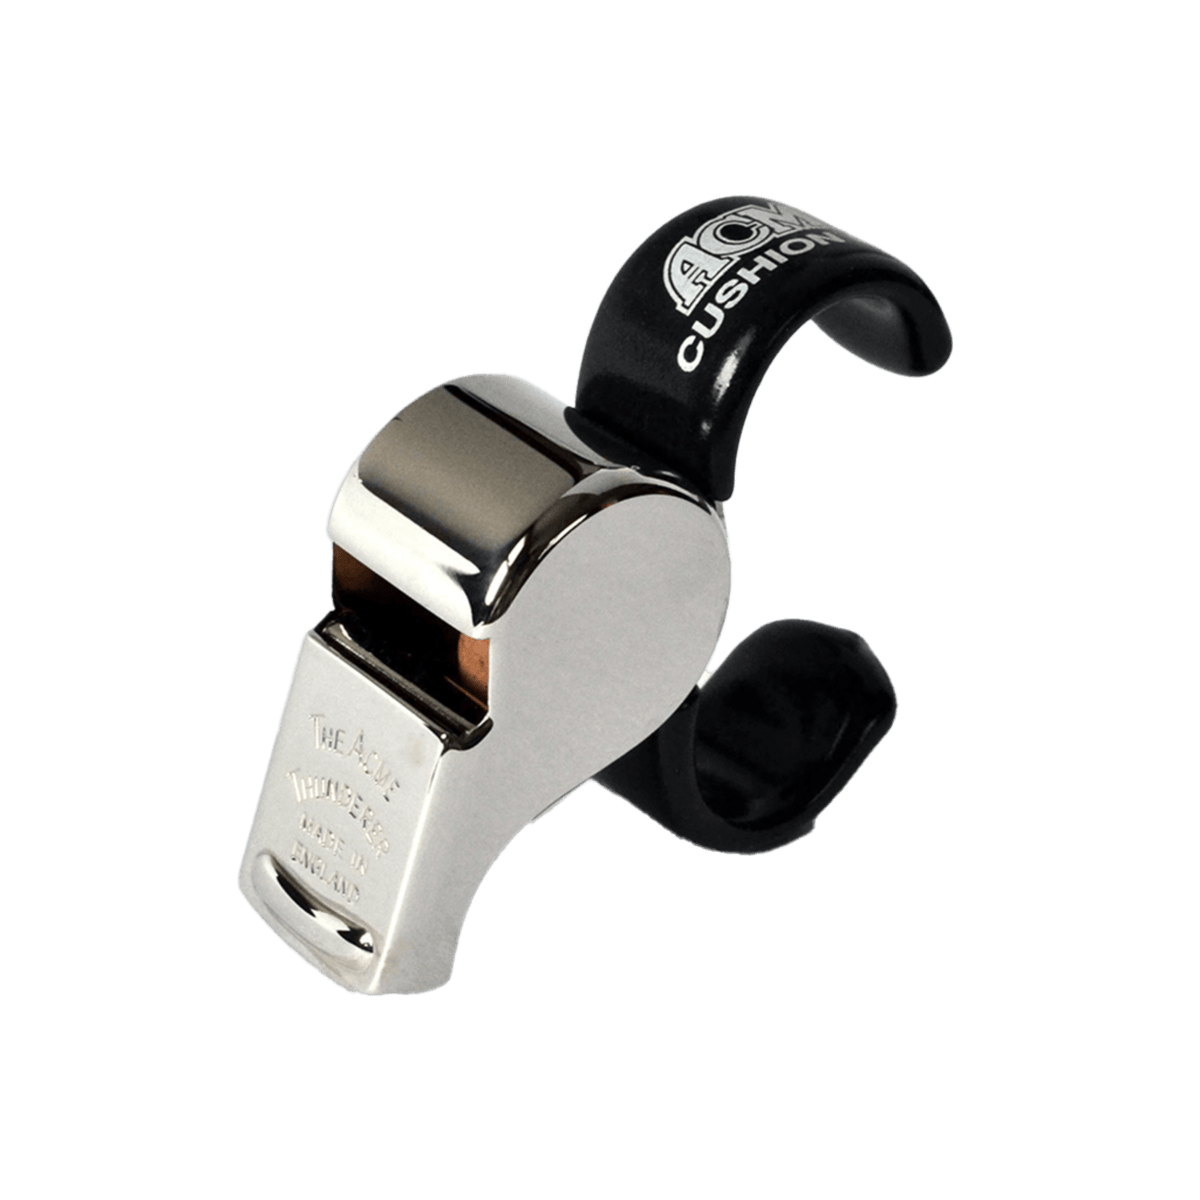 Acme Thunderer Whistle - 477/58.5 - Nickel-Plated